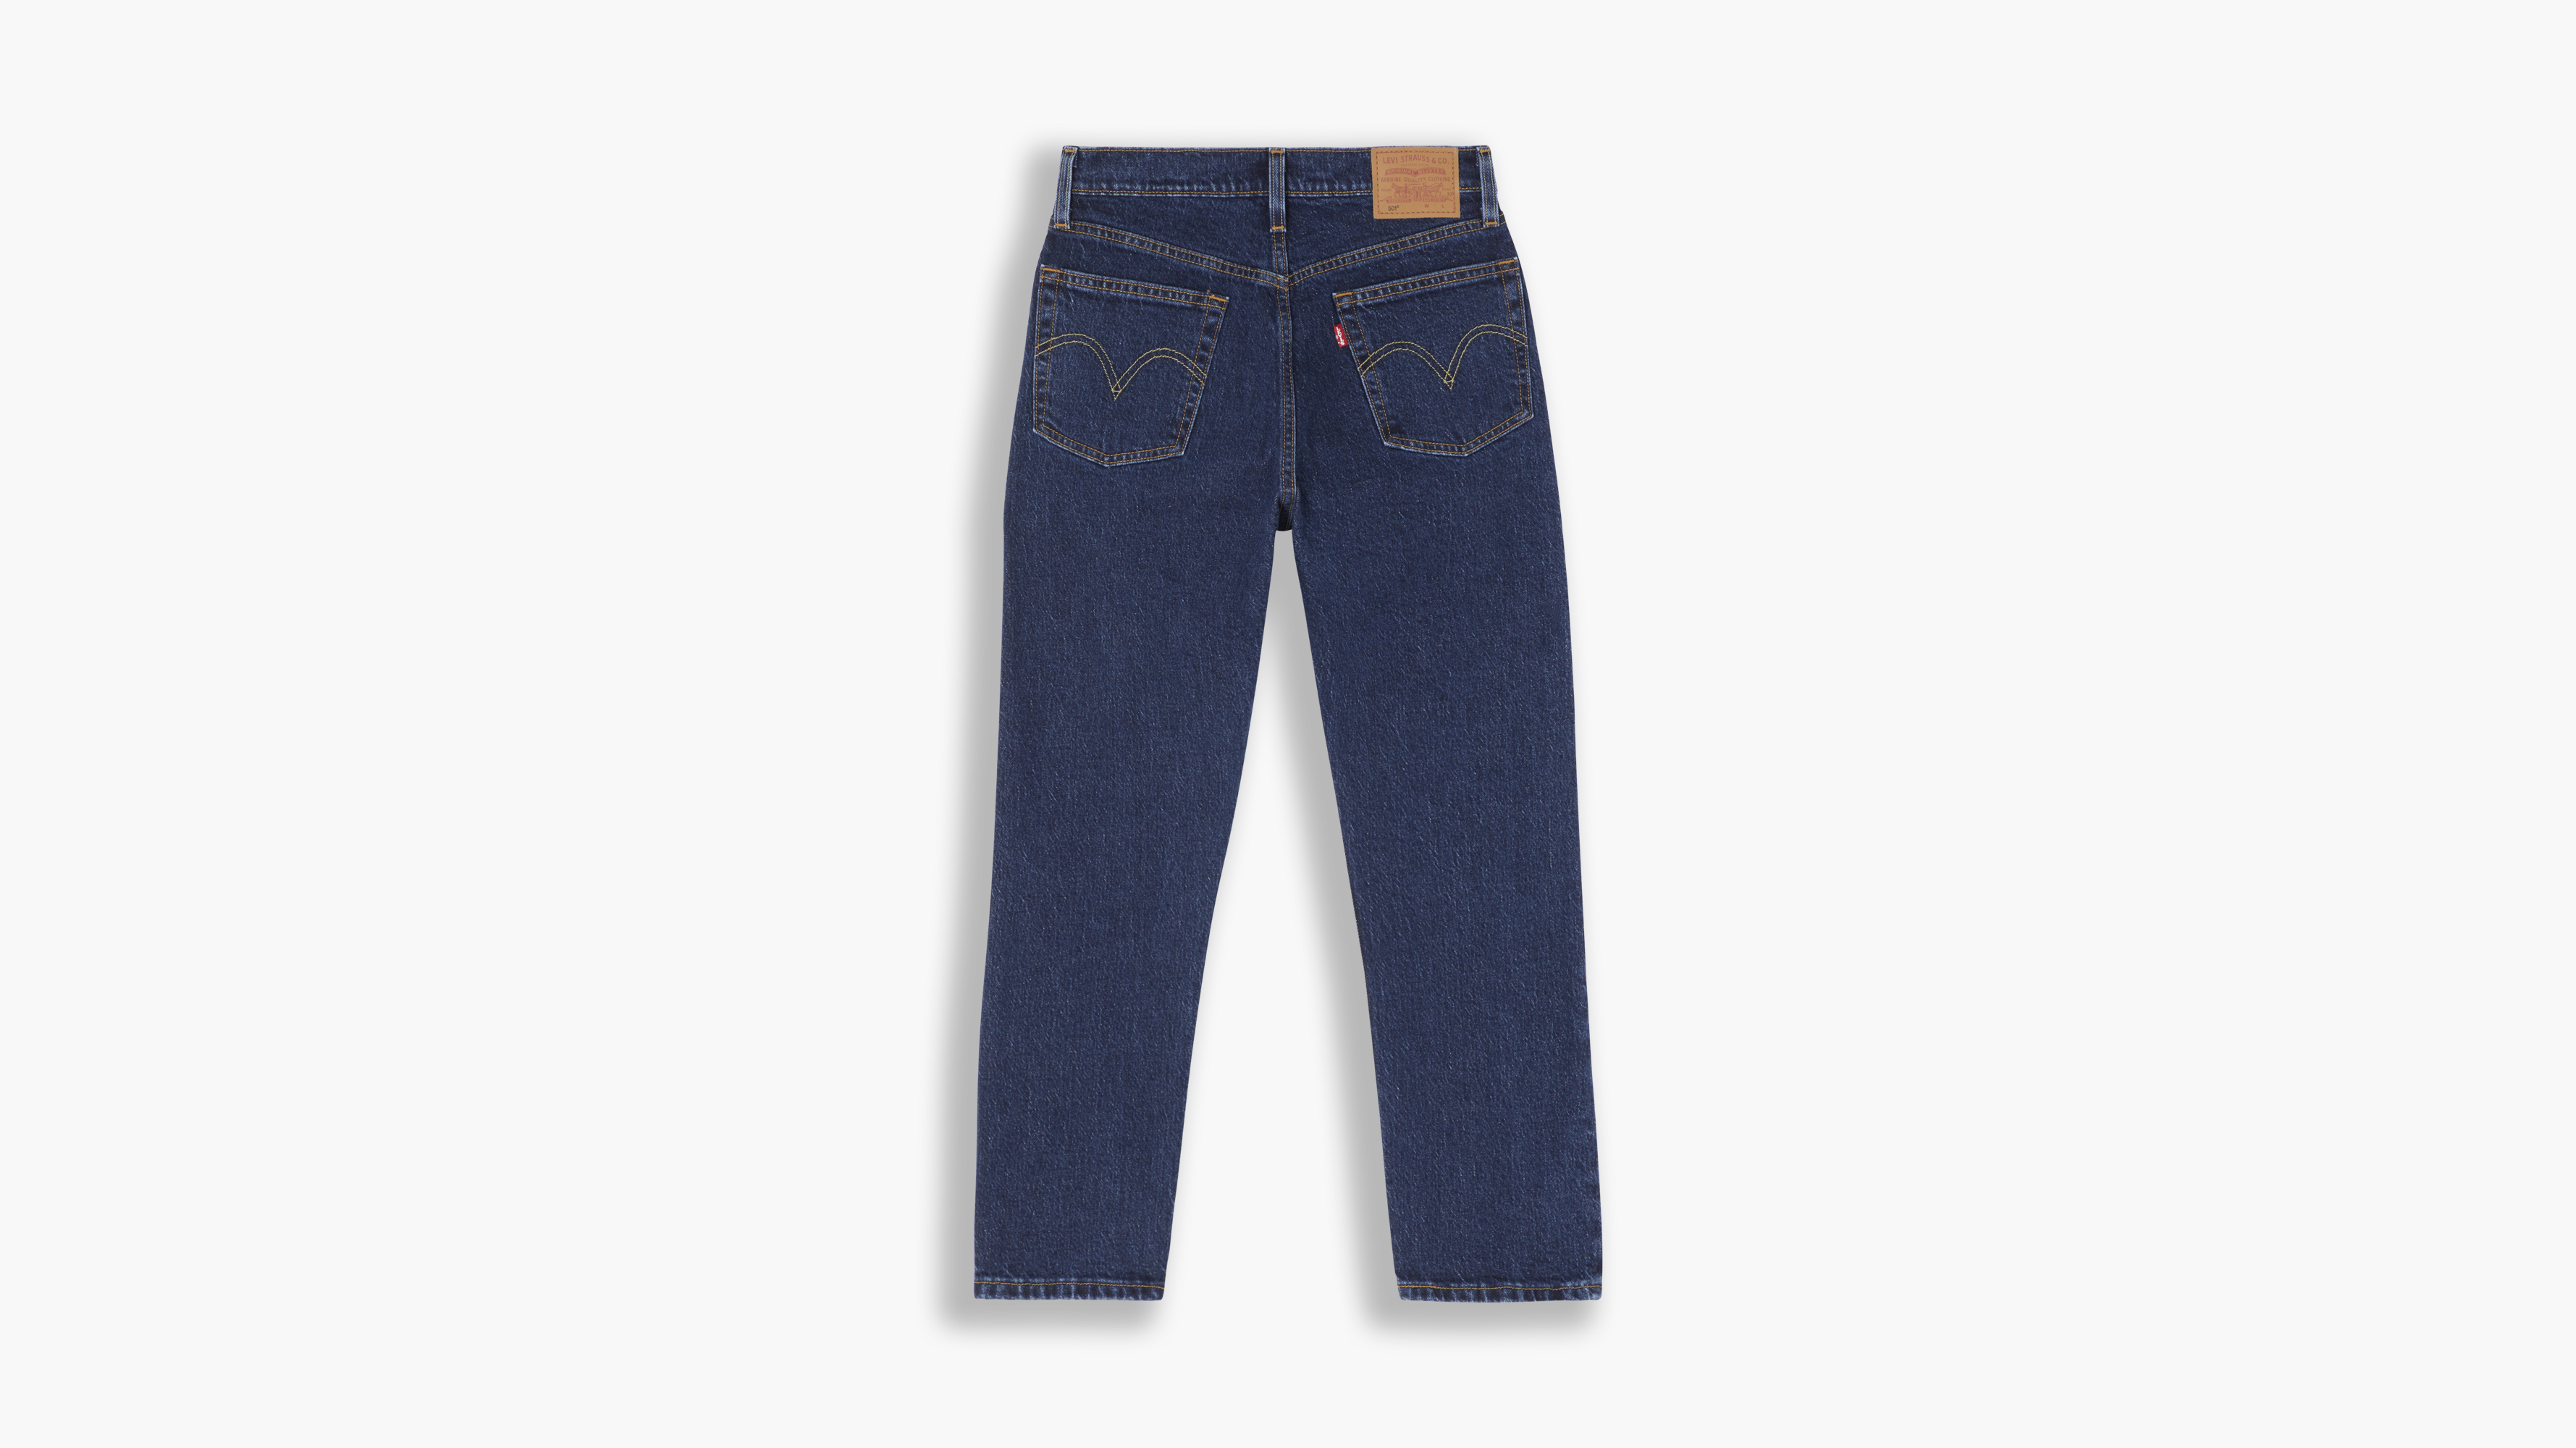 Levi's 501 Original Crop jeans, salsa stonewash, 26/28